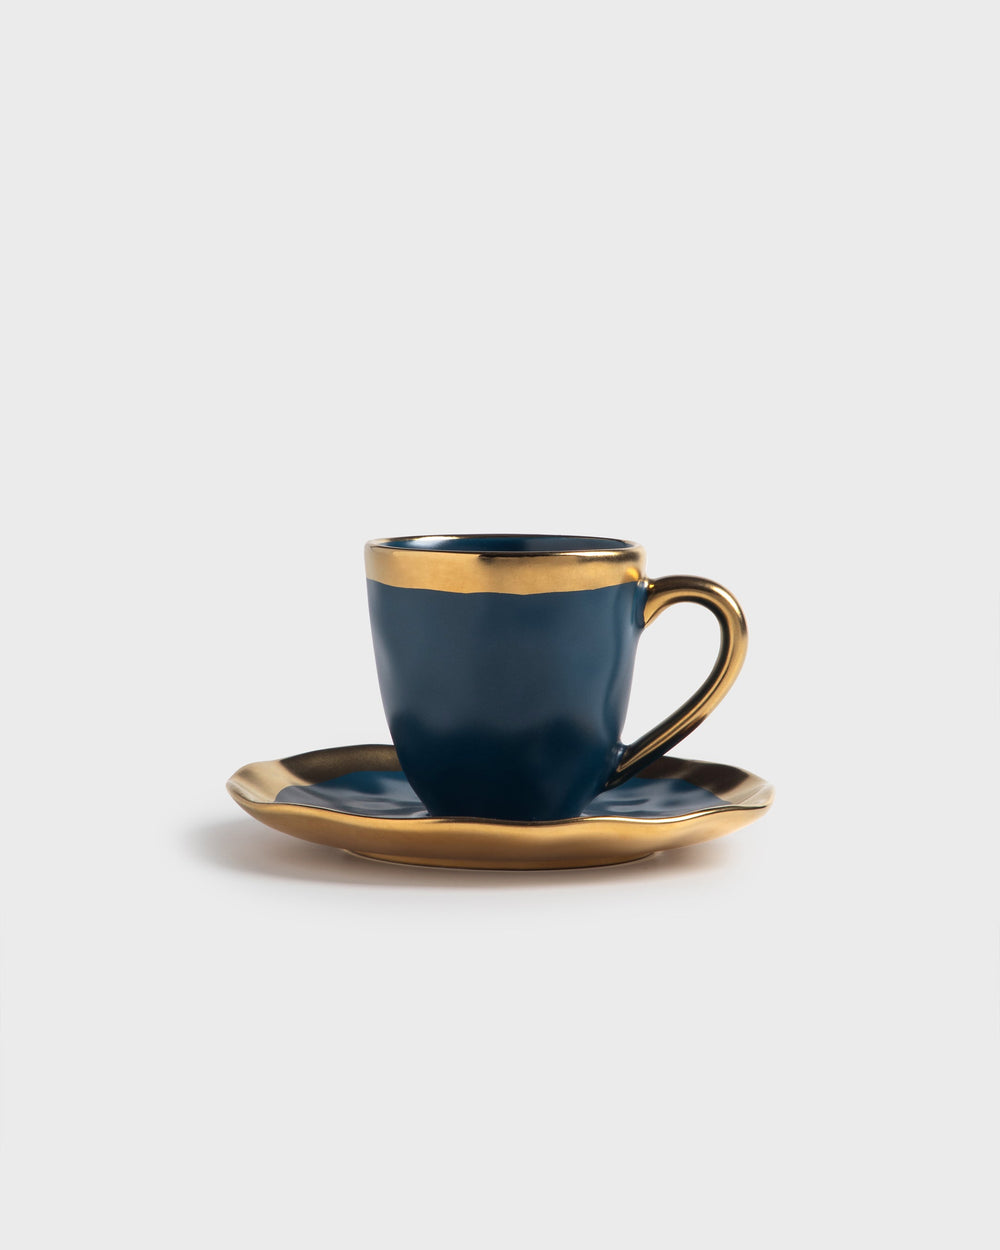 Tania Bulhoes Espresso Cup and Saucer Mediterraneo Cobalt Blue